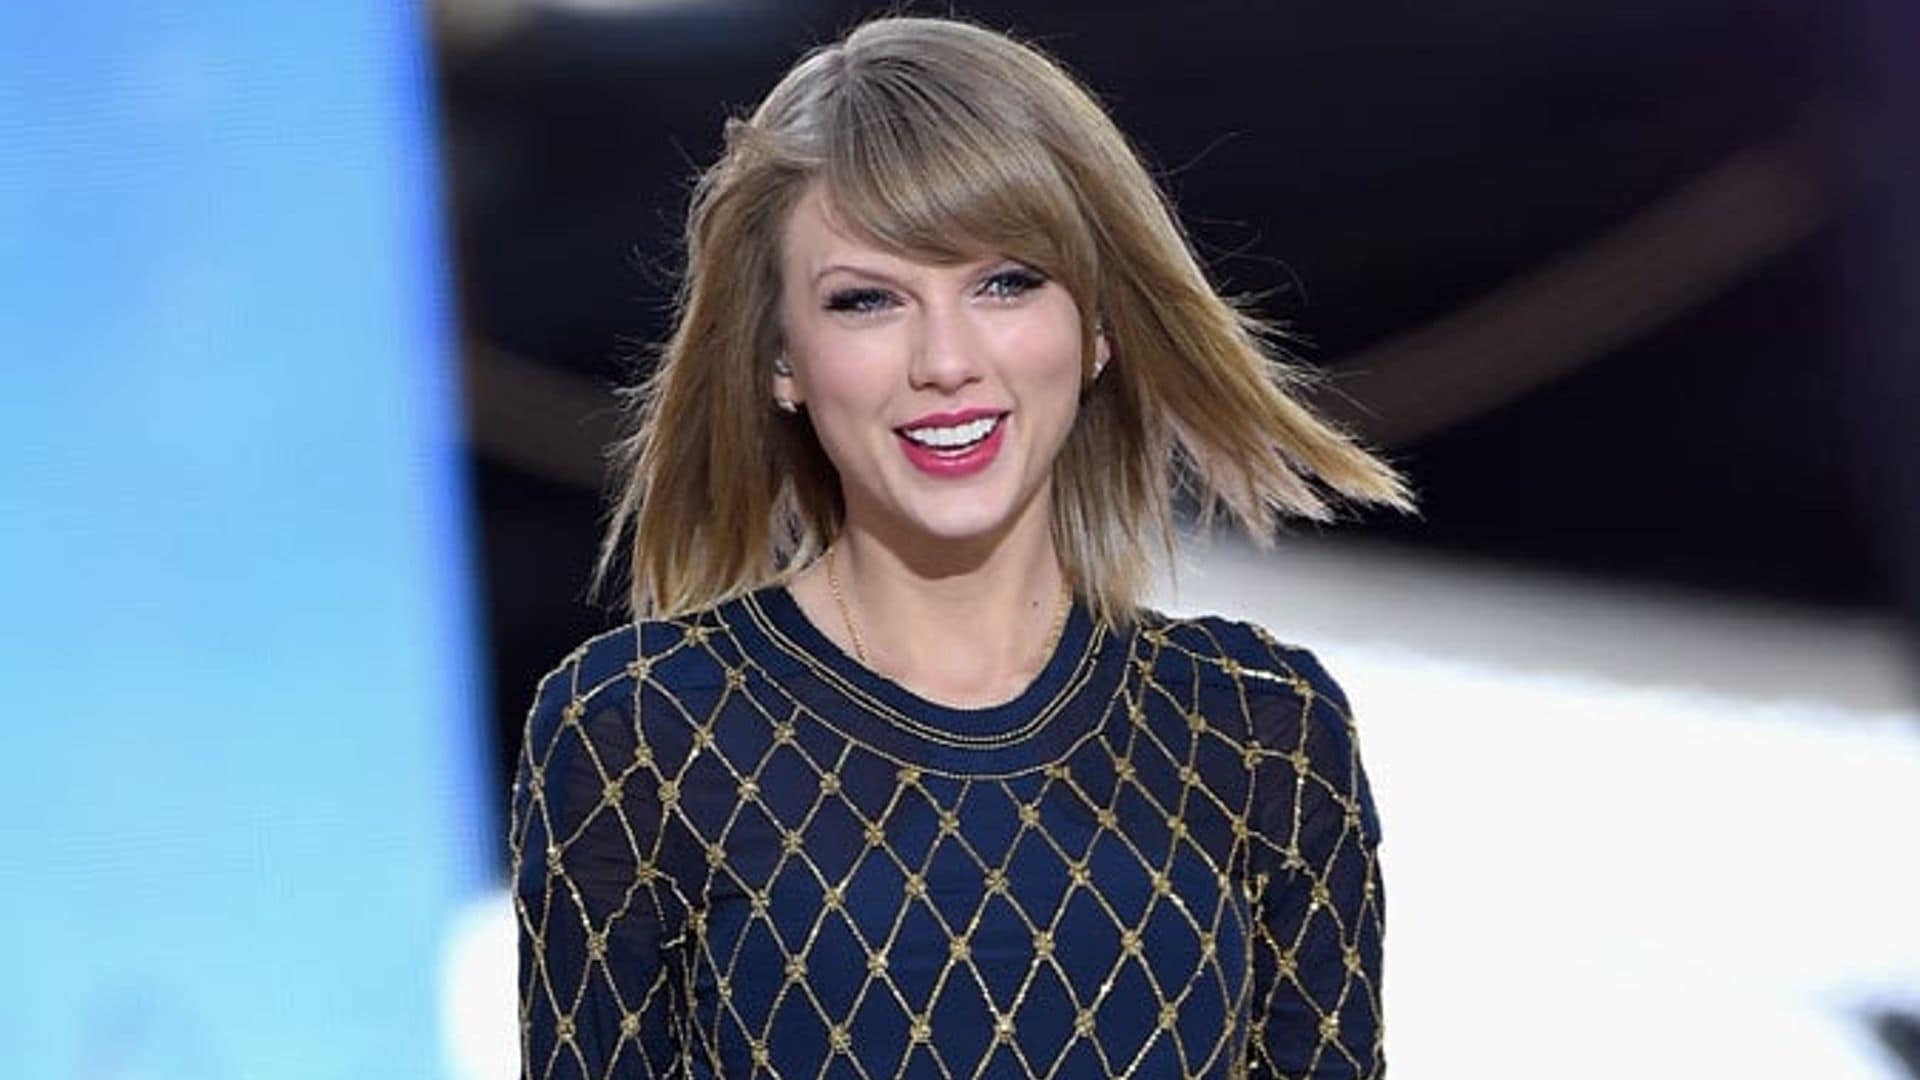 Taylor Swift's new doppelgänger is someone's grandma